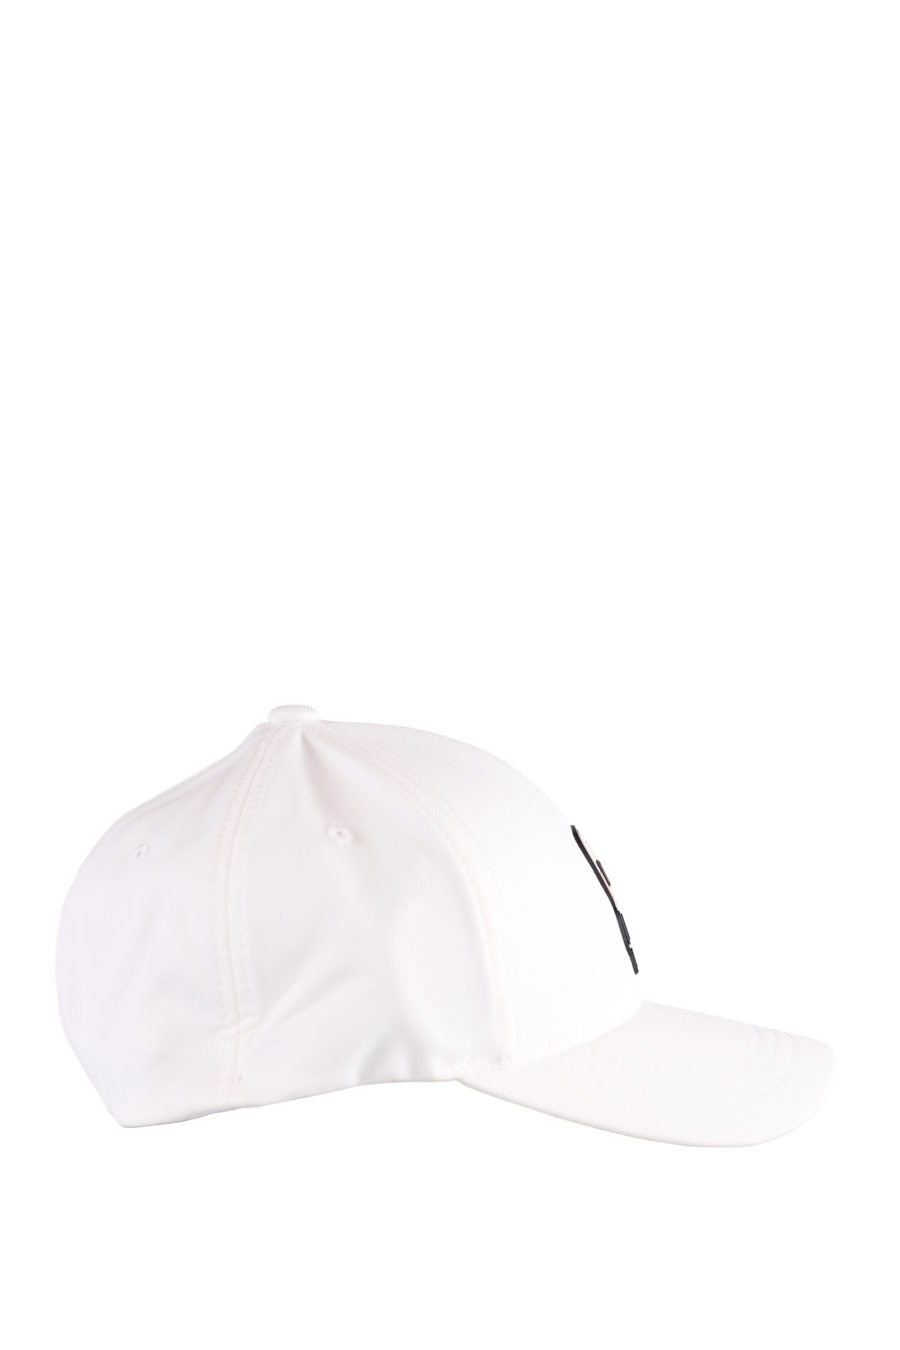 Gorra blanca con logotipo engomado "Karl" - IMG 9579